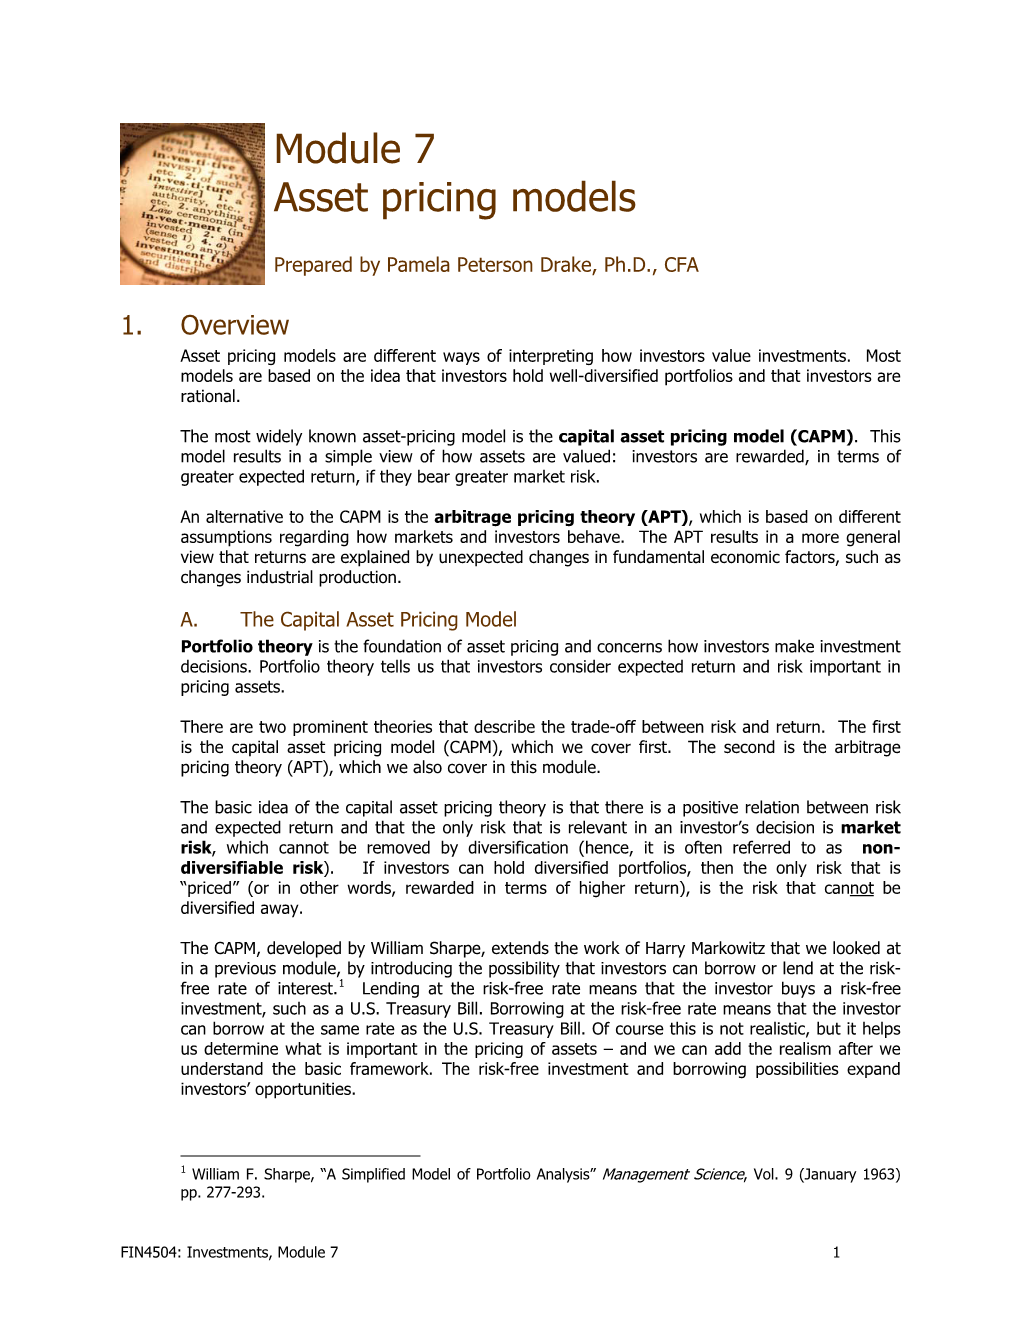 Module 7 Asset Pricing Models